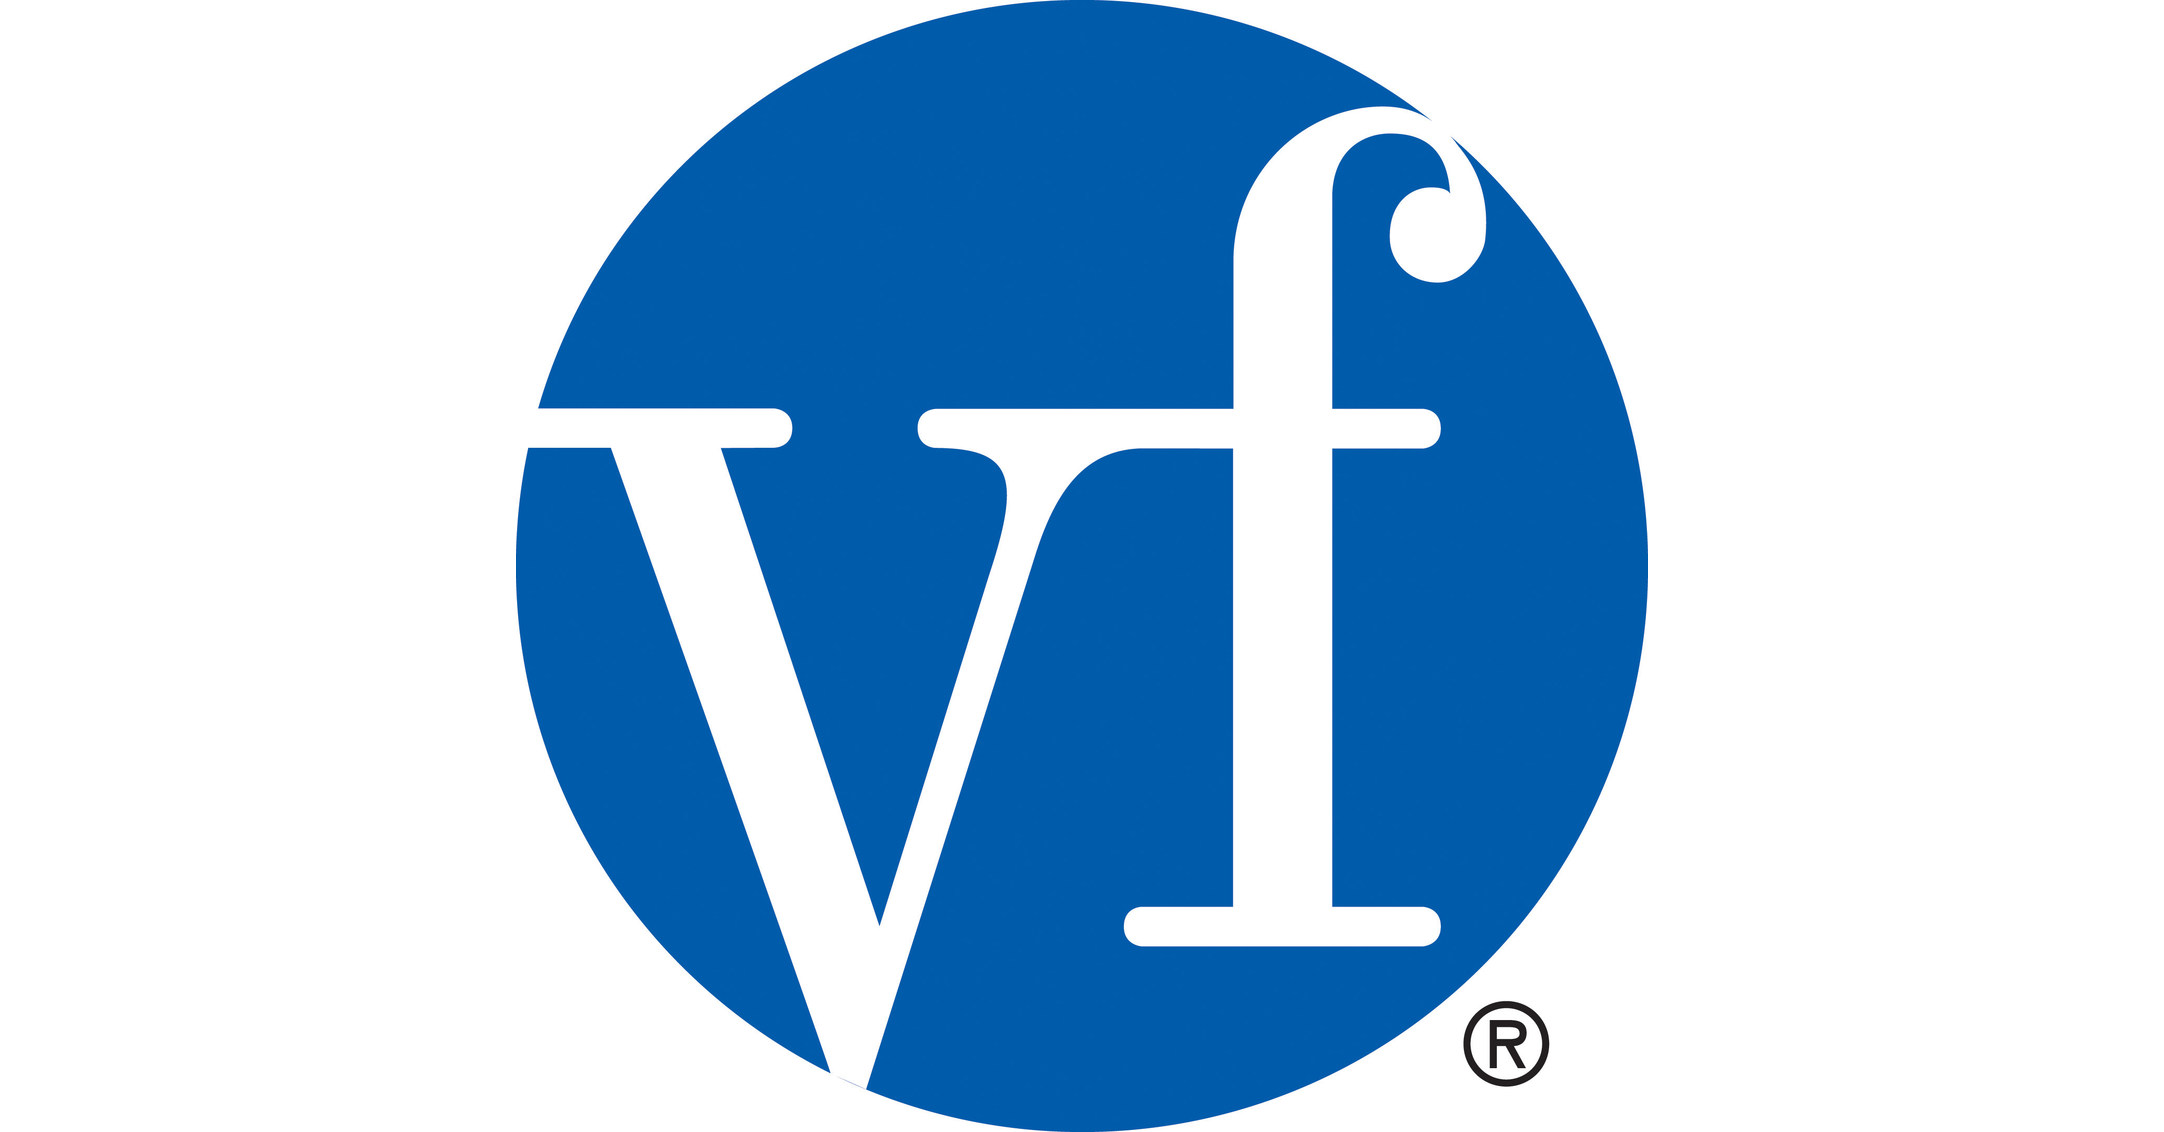 Vf Corporation Stock Photos - Free & Royalty-Free Stock Photos